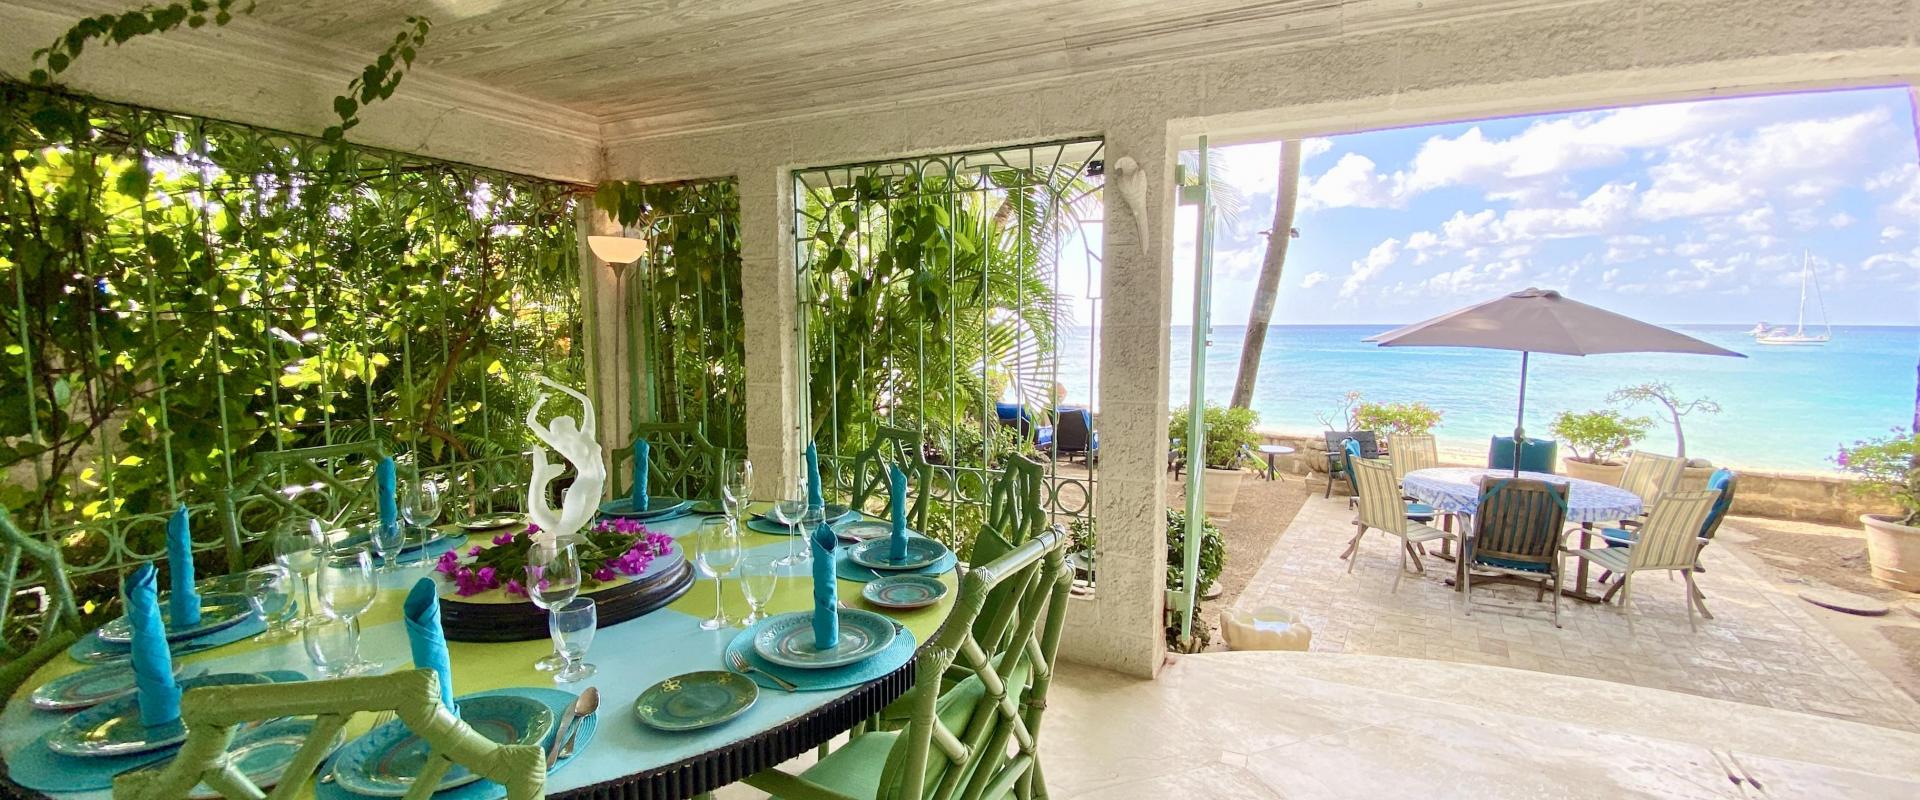 Beachfront Barbados Villa Rental Seascape Dining Table and Beachview